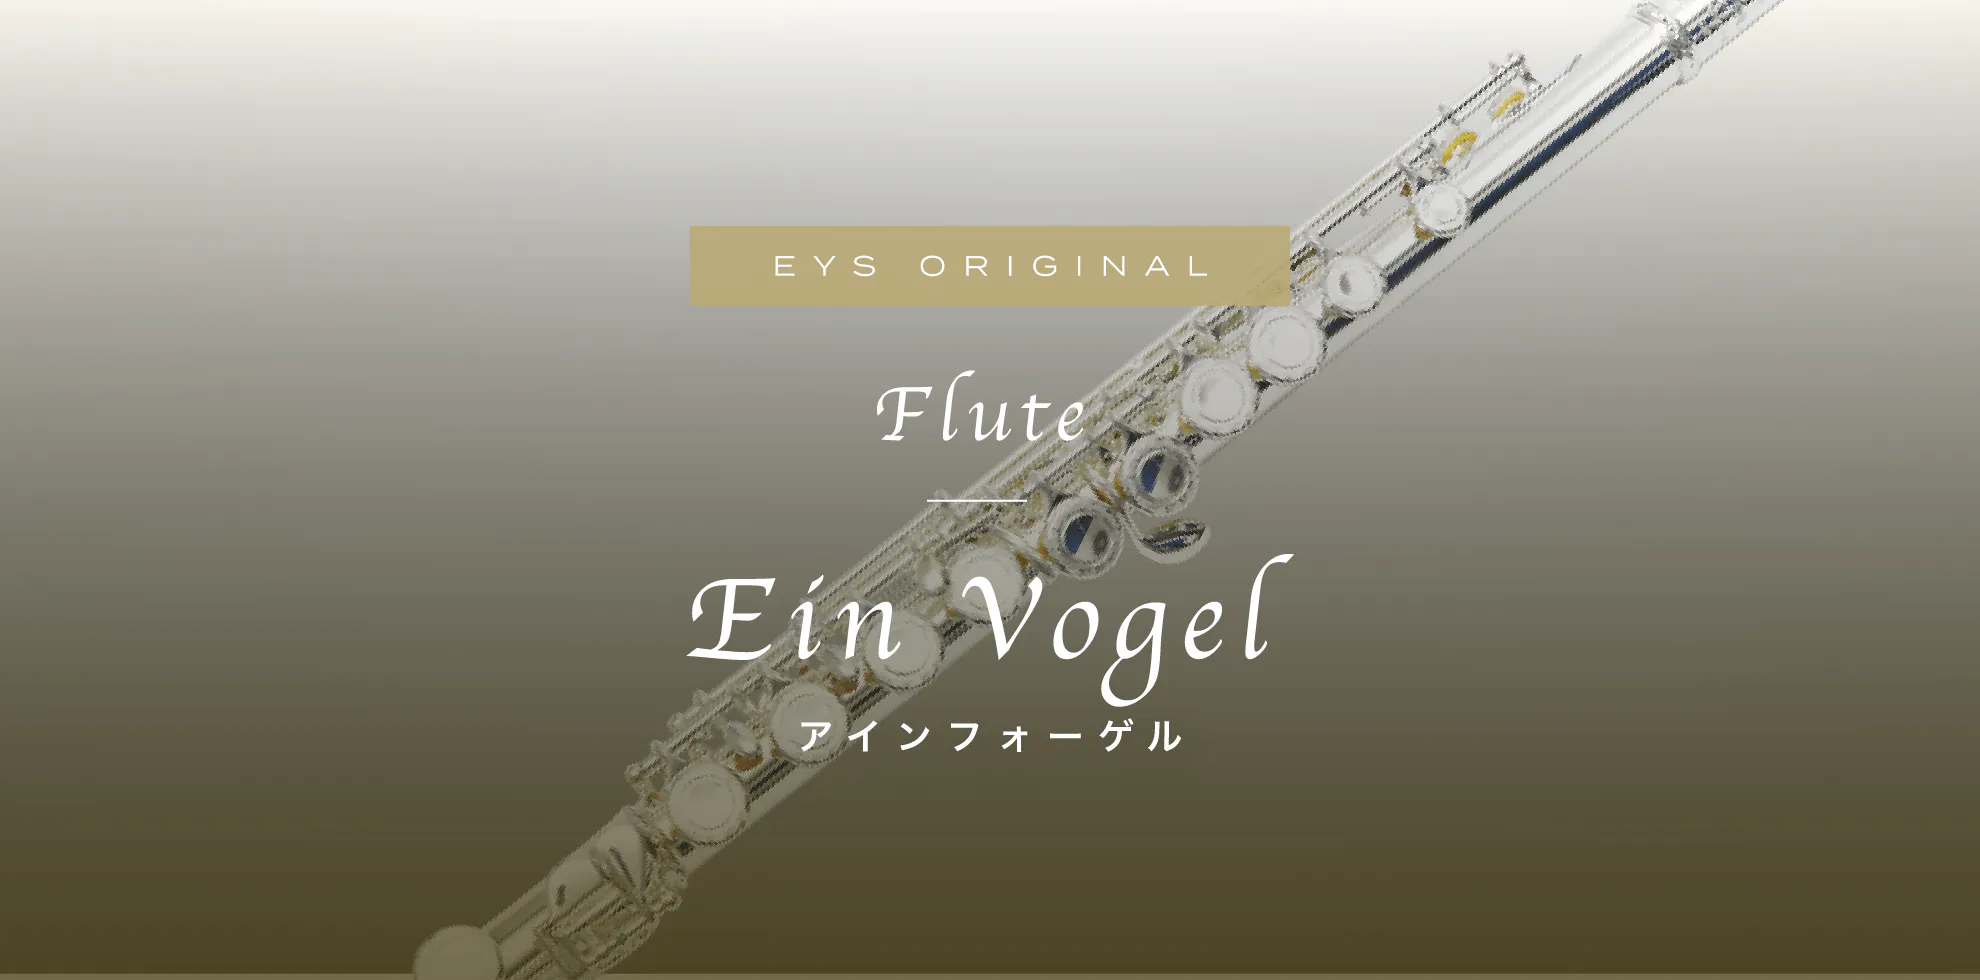 EYS ORIGINAL Flute Ein Vogel アインフォーゲル